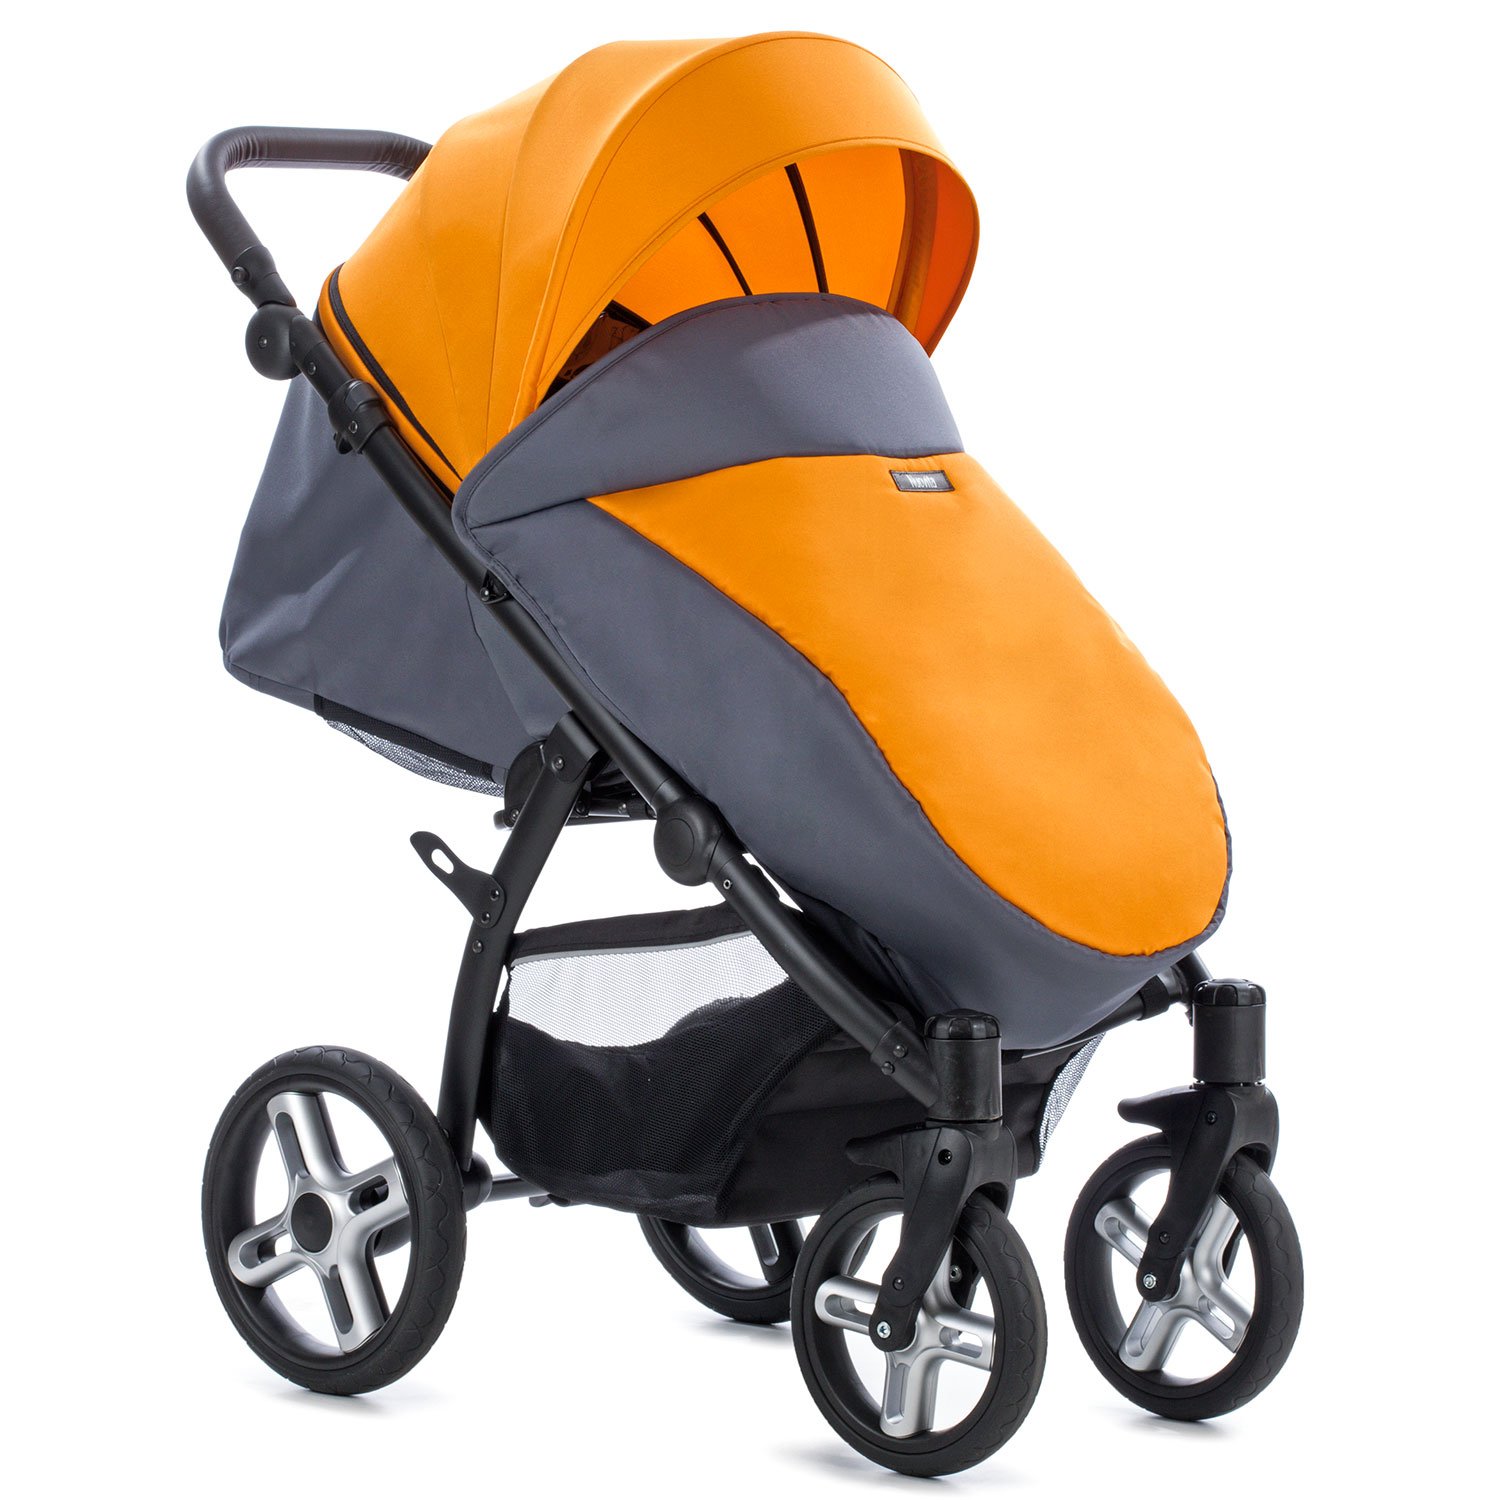 Прогулочная коляска Nuovita Modo Terreno, цвет Arancione grigio / Оранжево-серый  